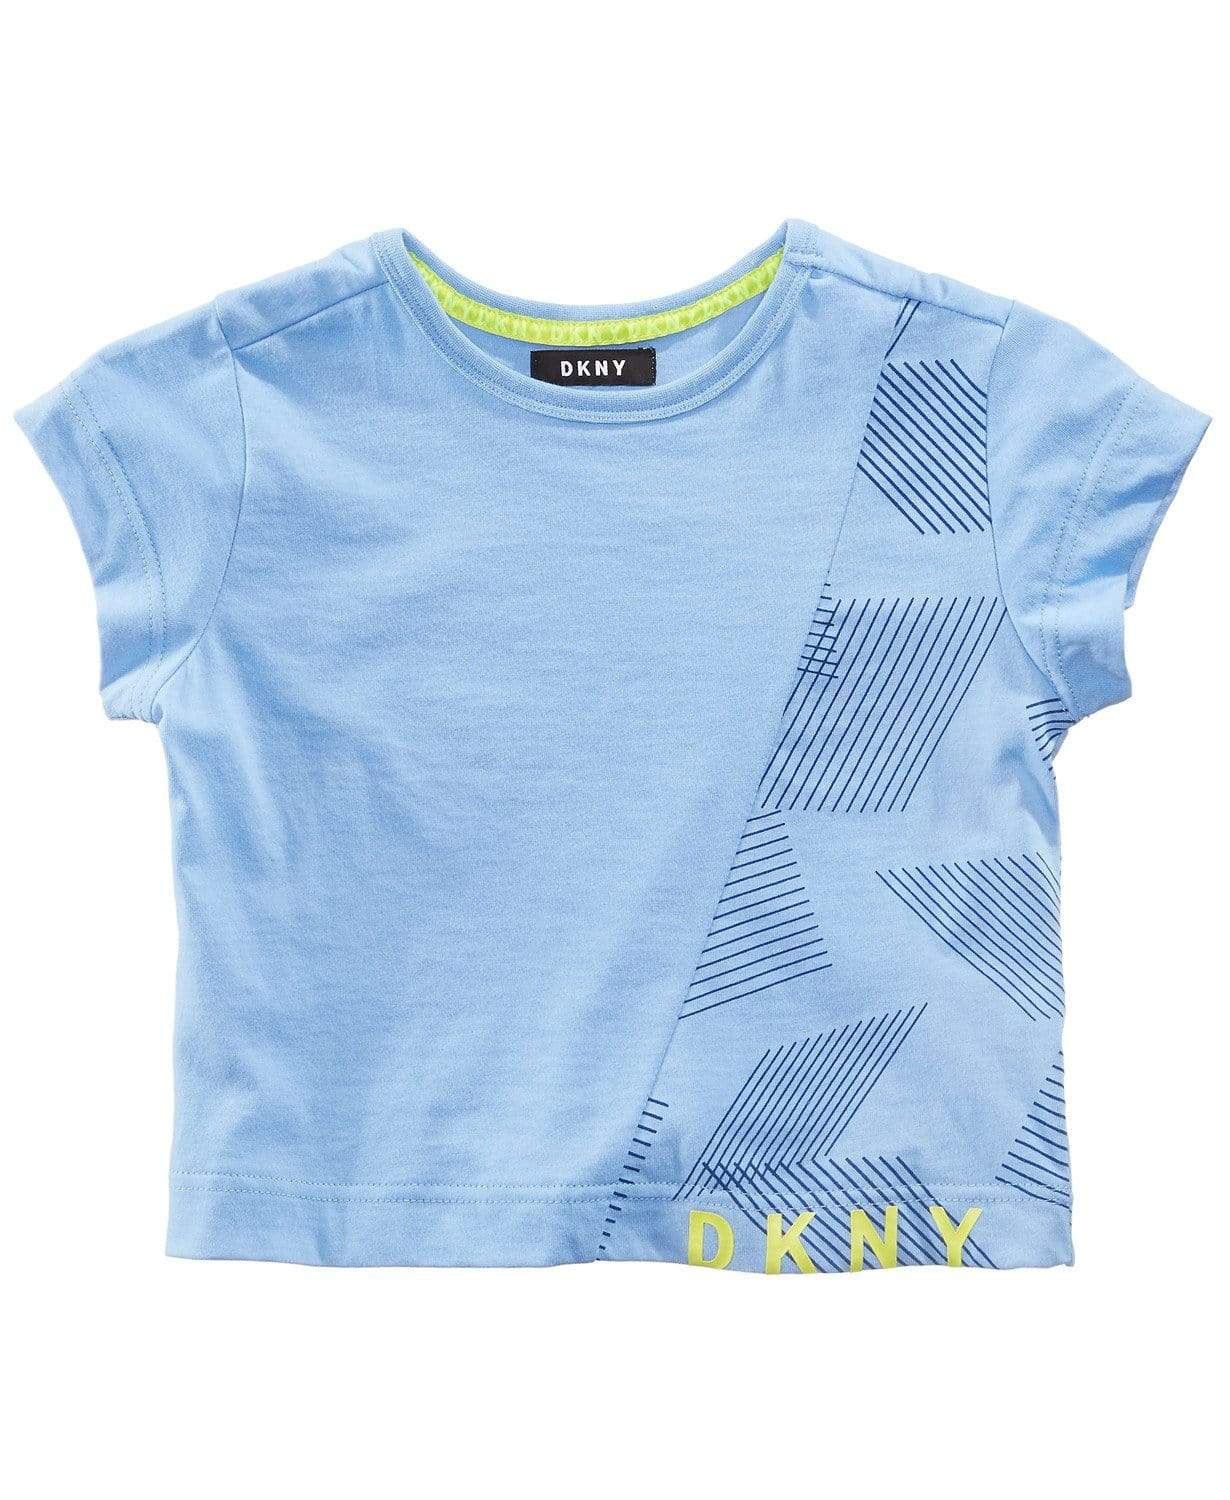 DKNY Apparel Kids - Asymmetrical Striped T